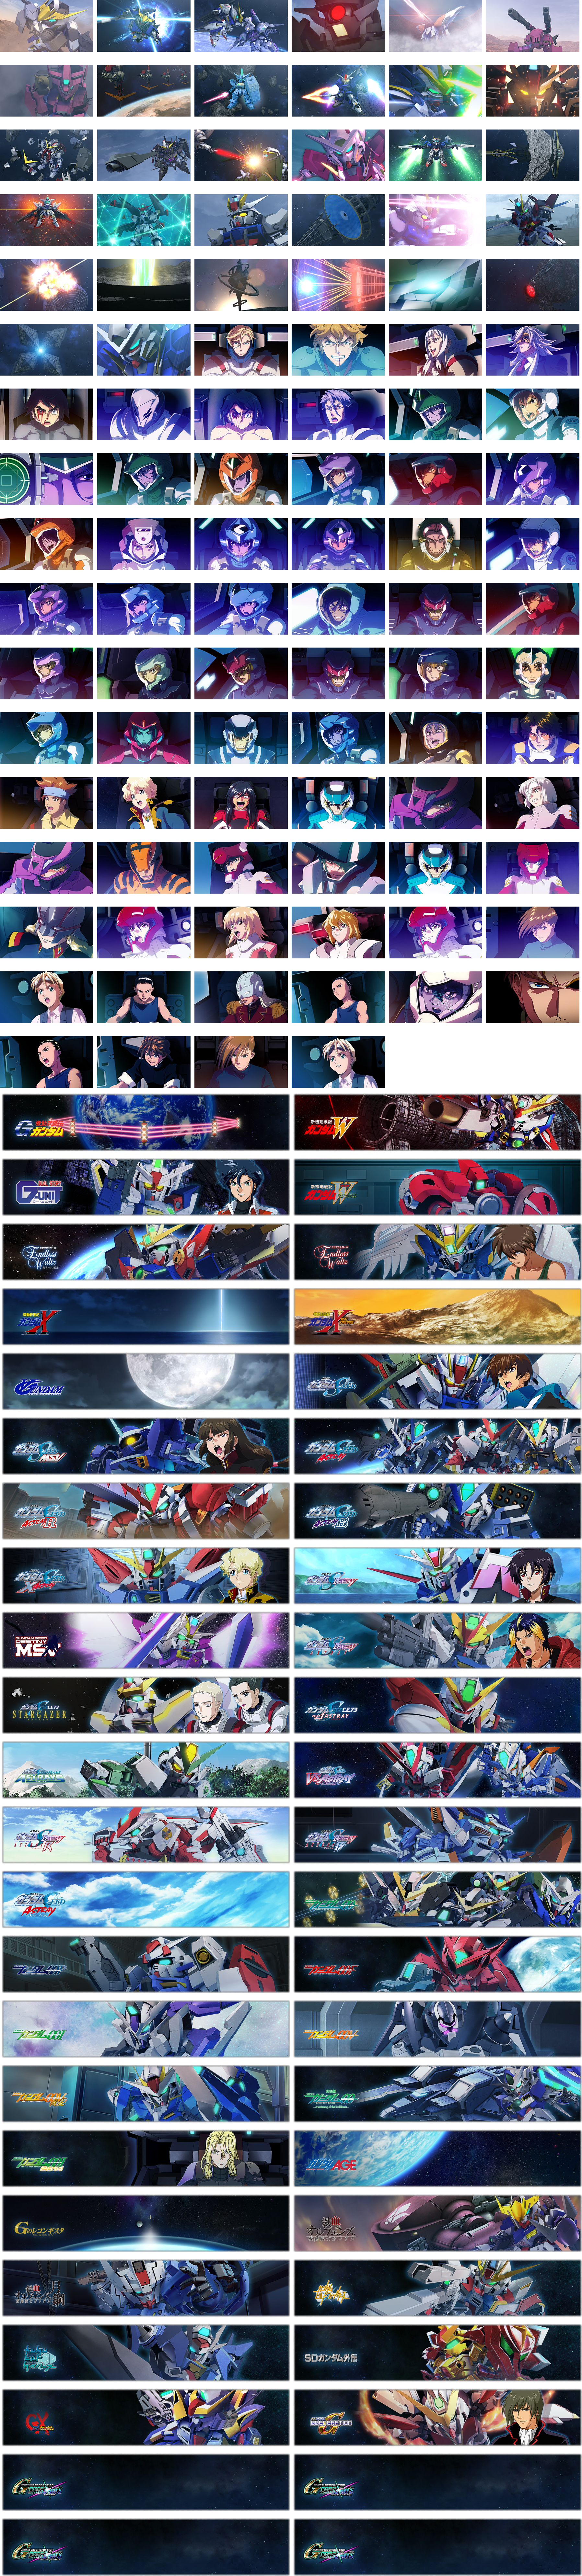 SD Gundam G Generation Cross Rays - Gallery Icons